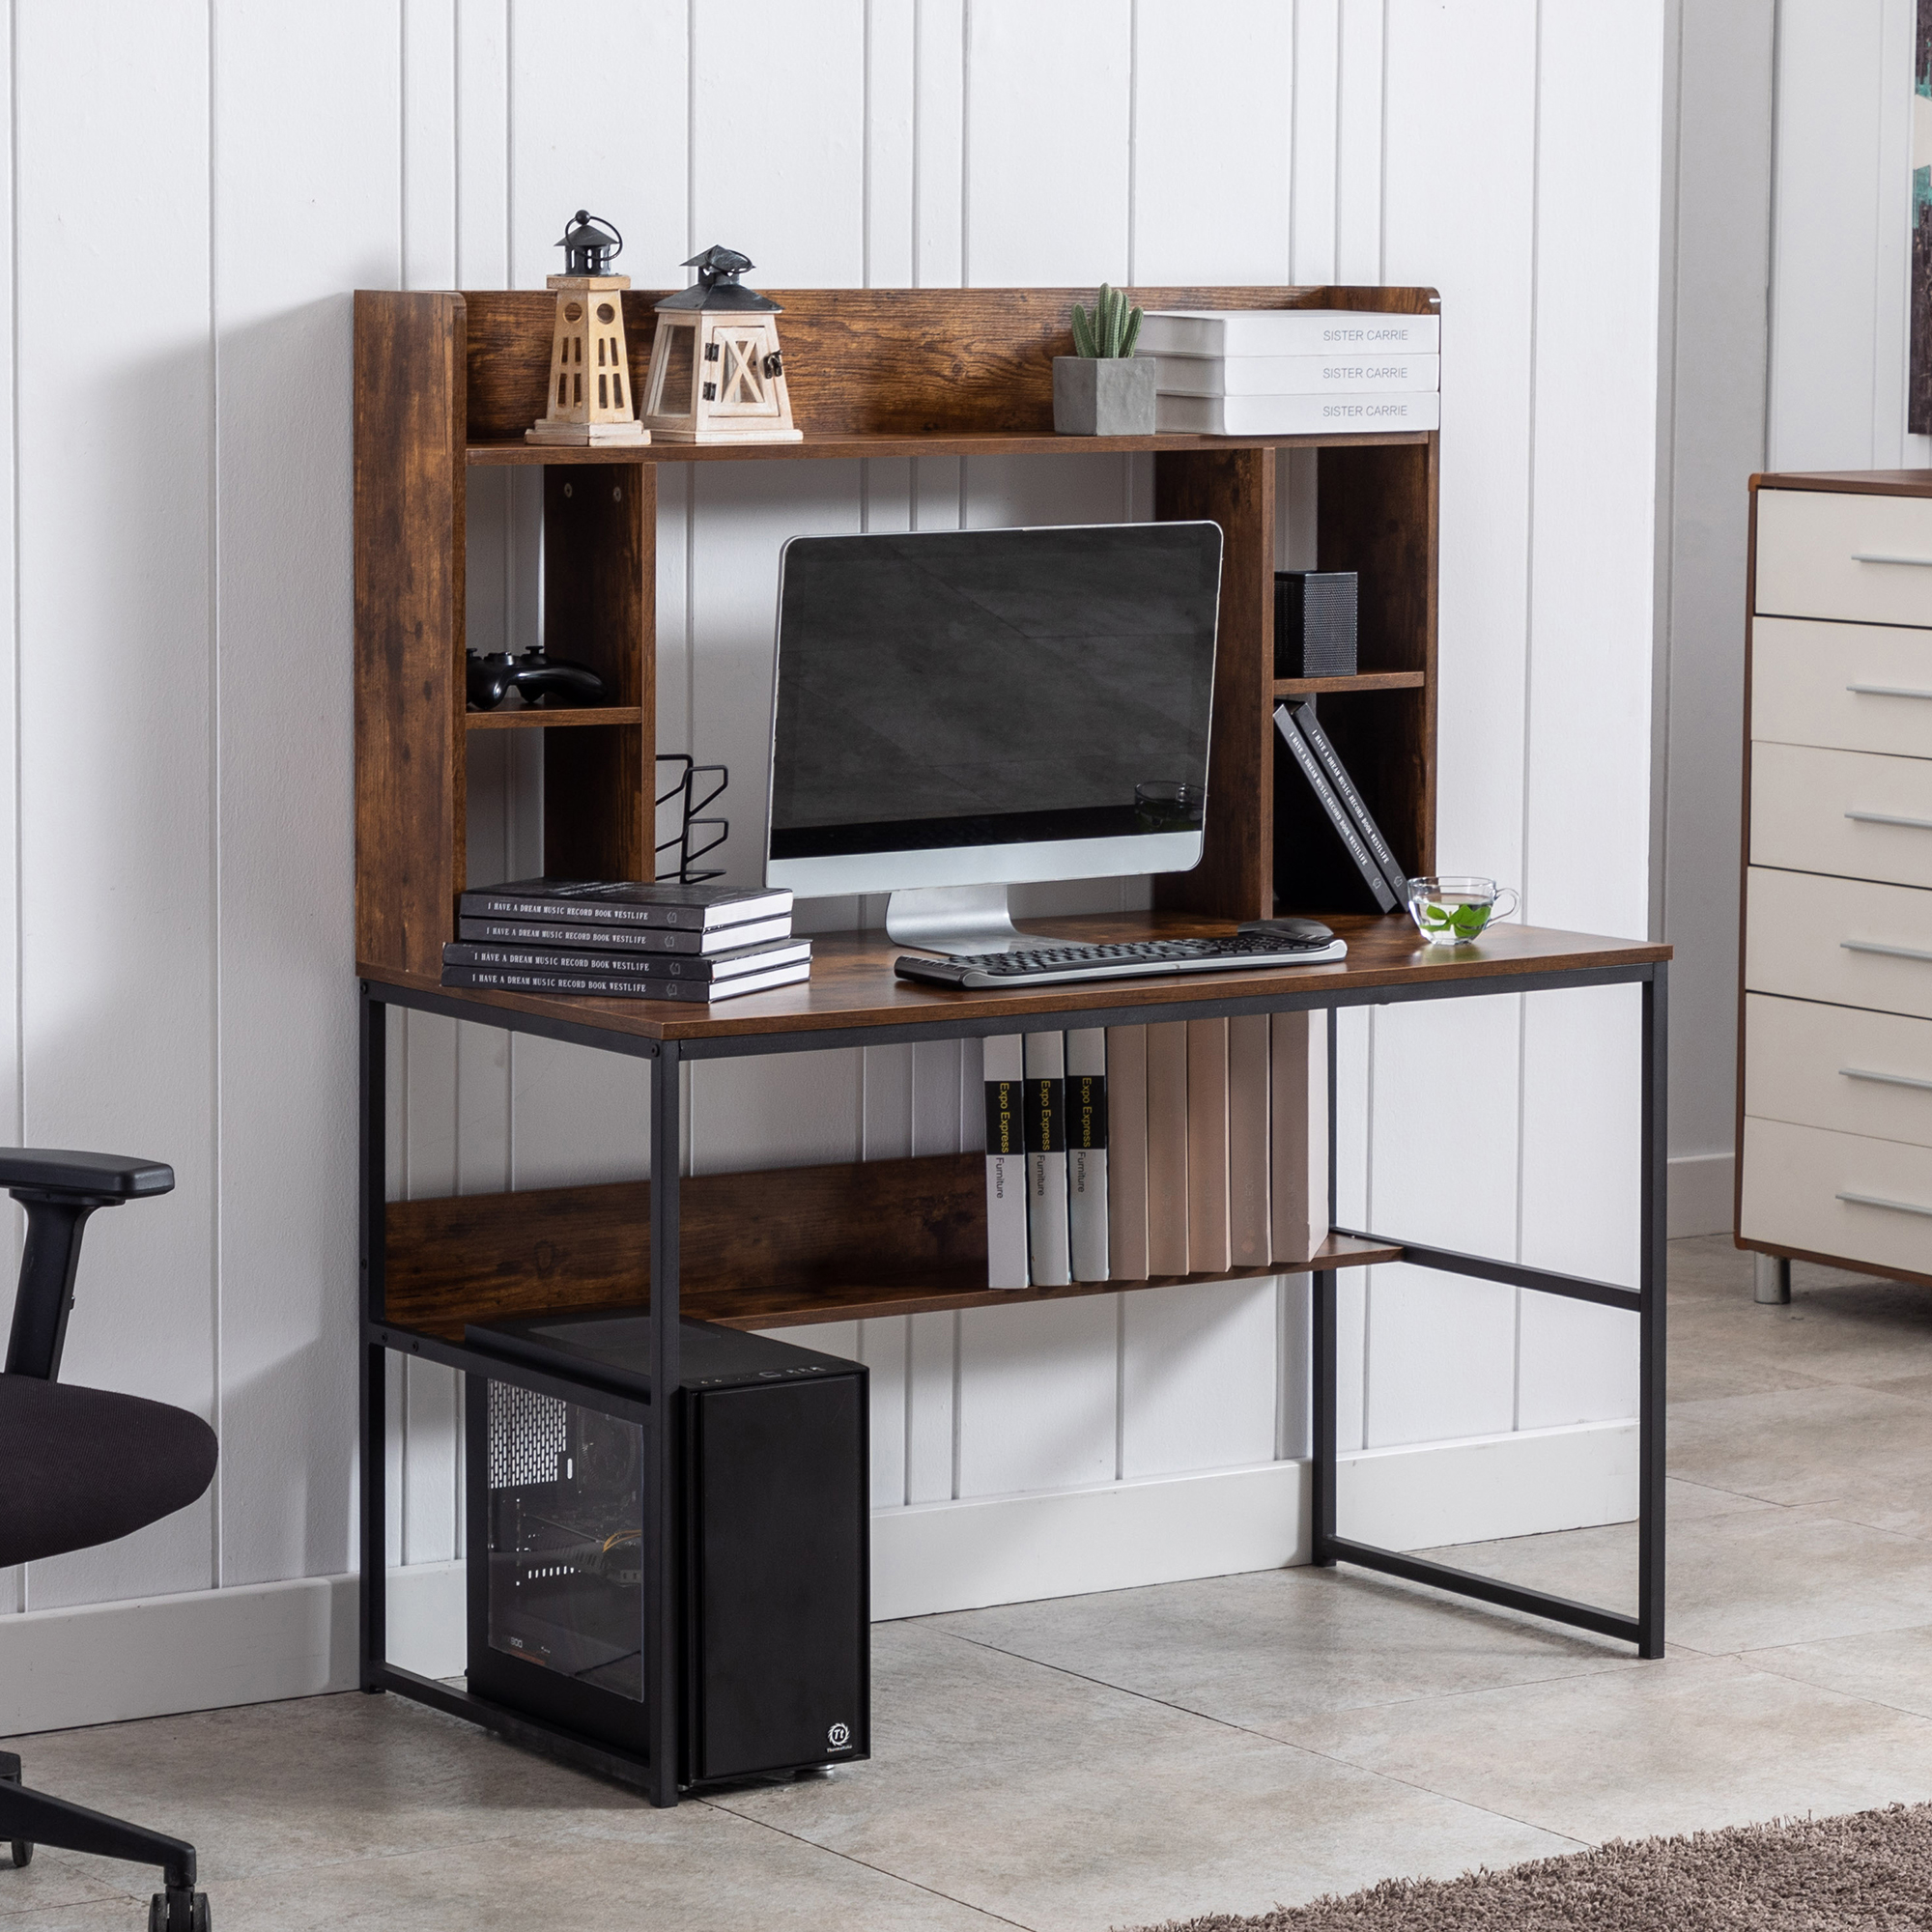 47 inch Home Office Desk Large Workstation with Storage Shelves - WF198460AAT